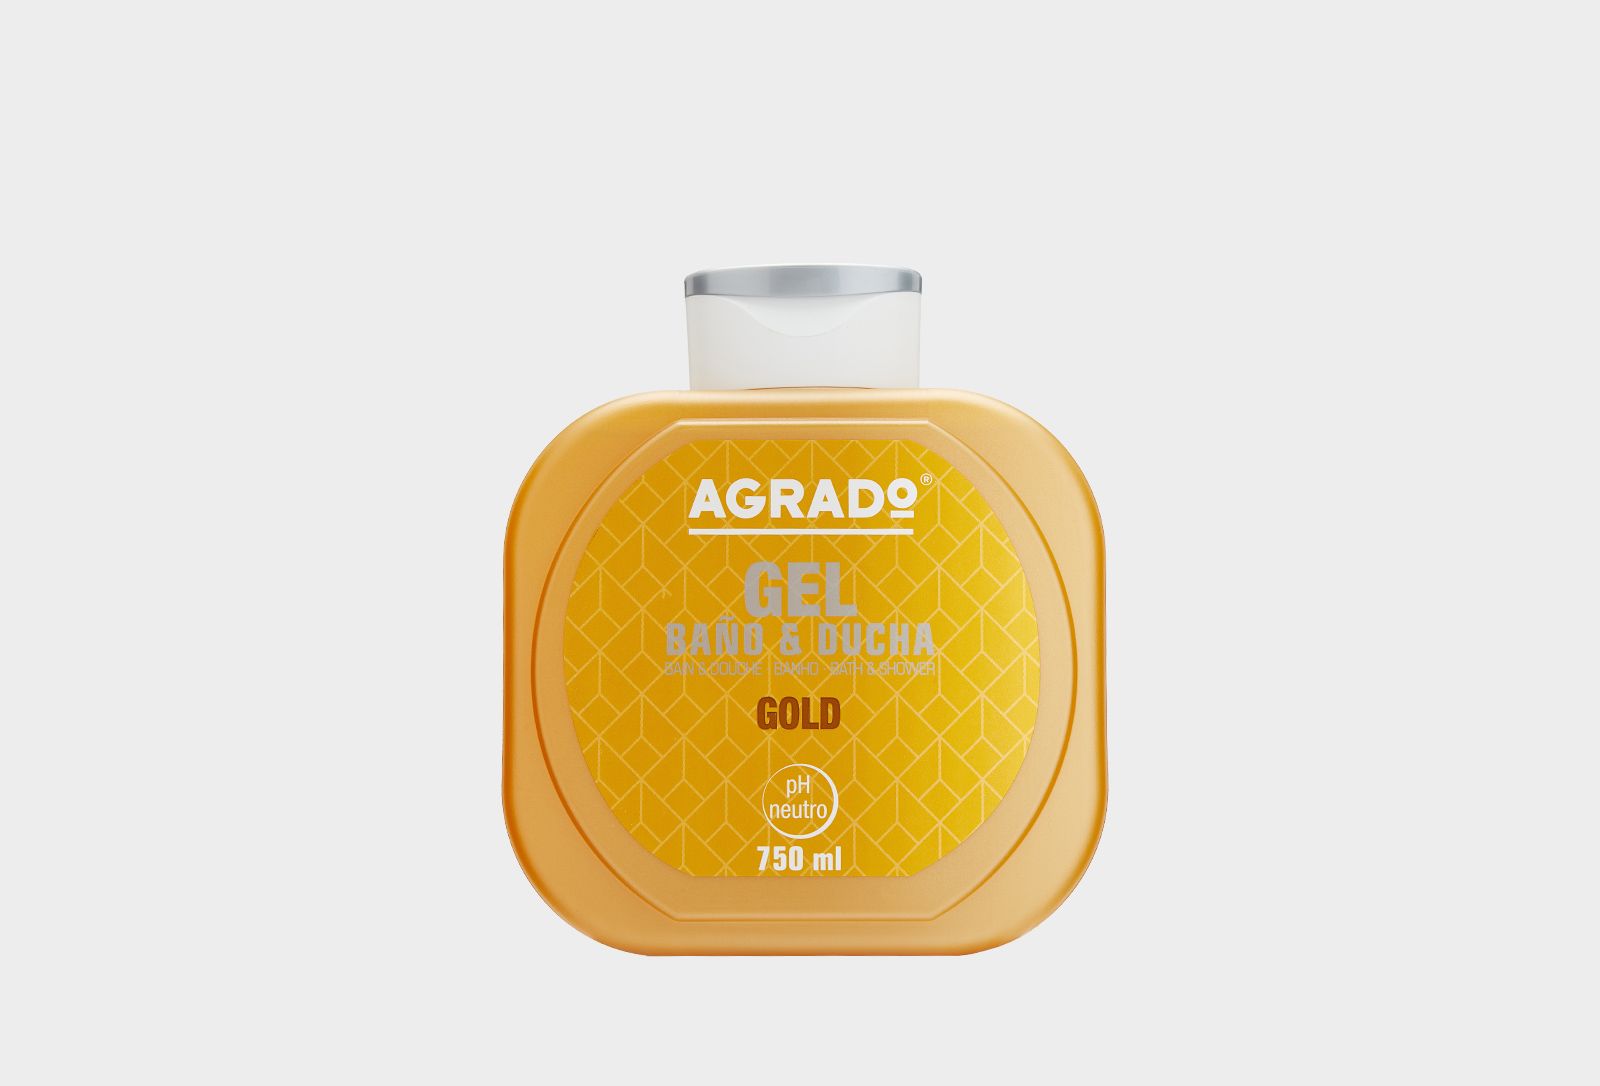 Agrado гель для душа. Гель для душа Аградо Голд 750мл. Гель для душа agrado ваниль, 750 мл. Agrado гель для ванн и душа Gold 750мл. Agrado гель для душа состав.